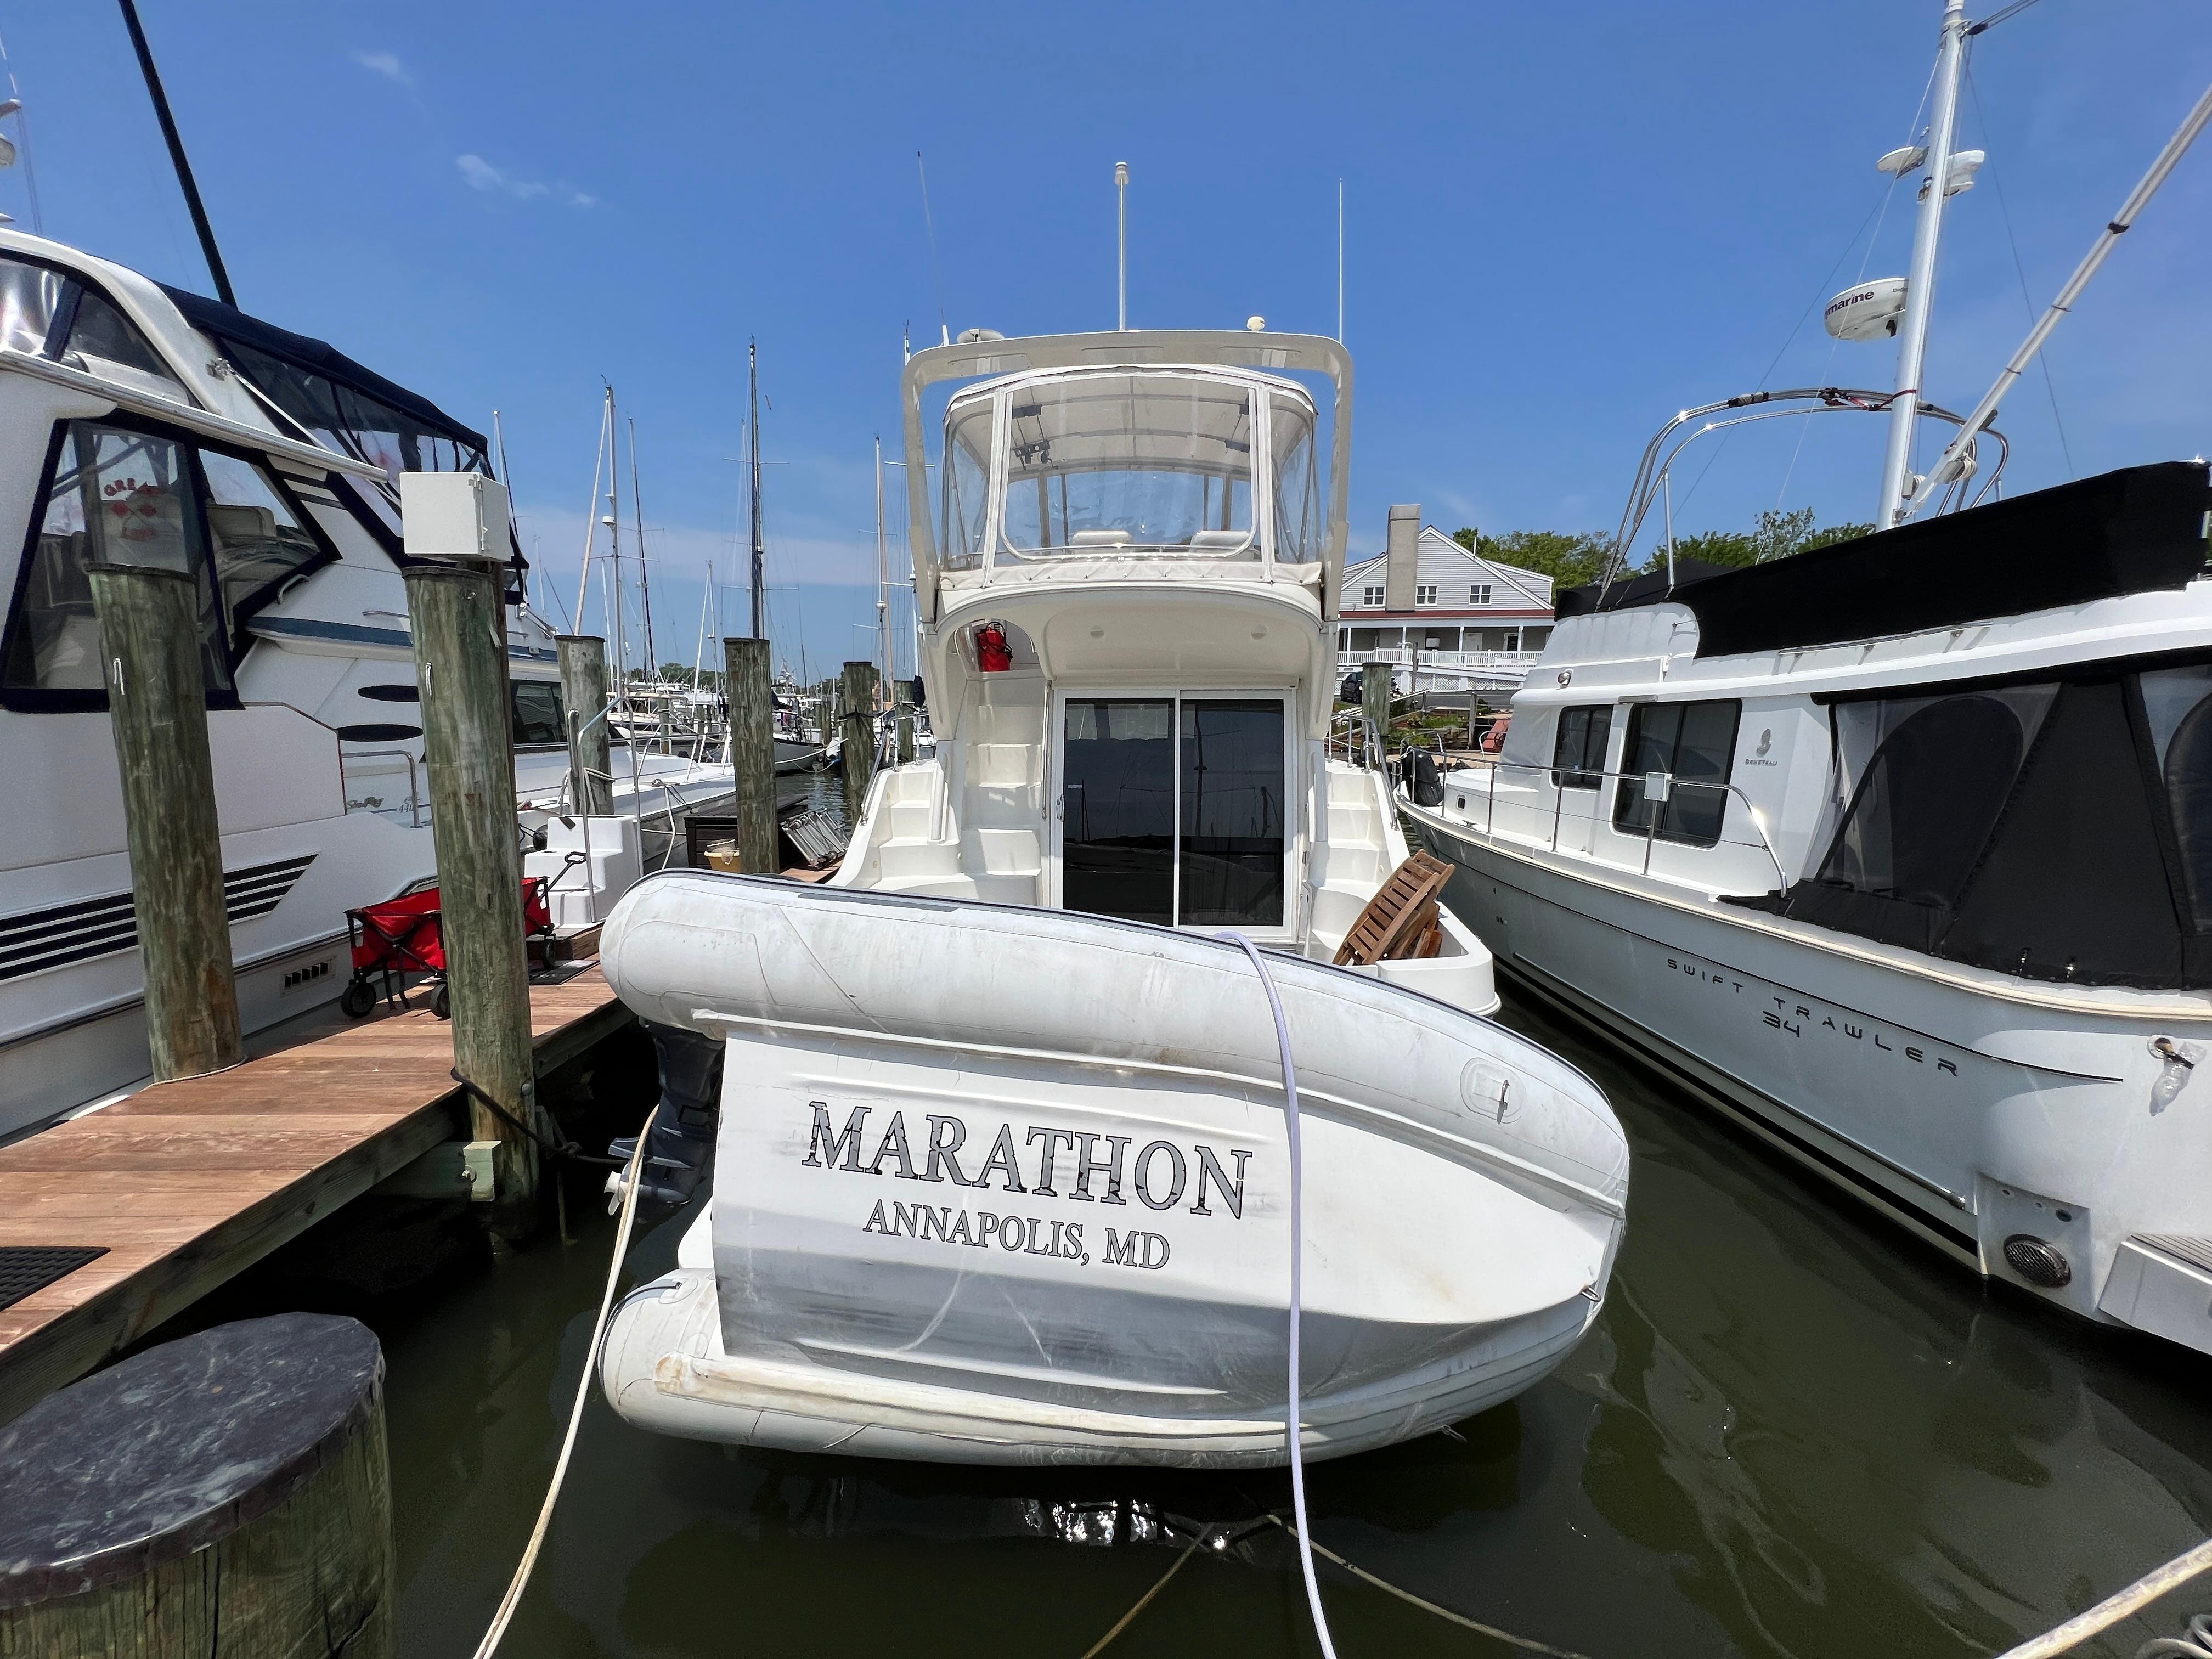 MARATHON Yacht Brokers Of Annapolis